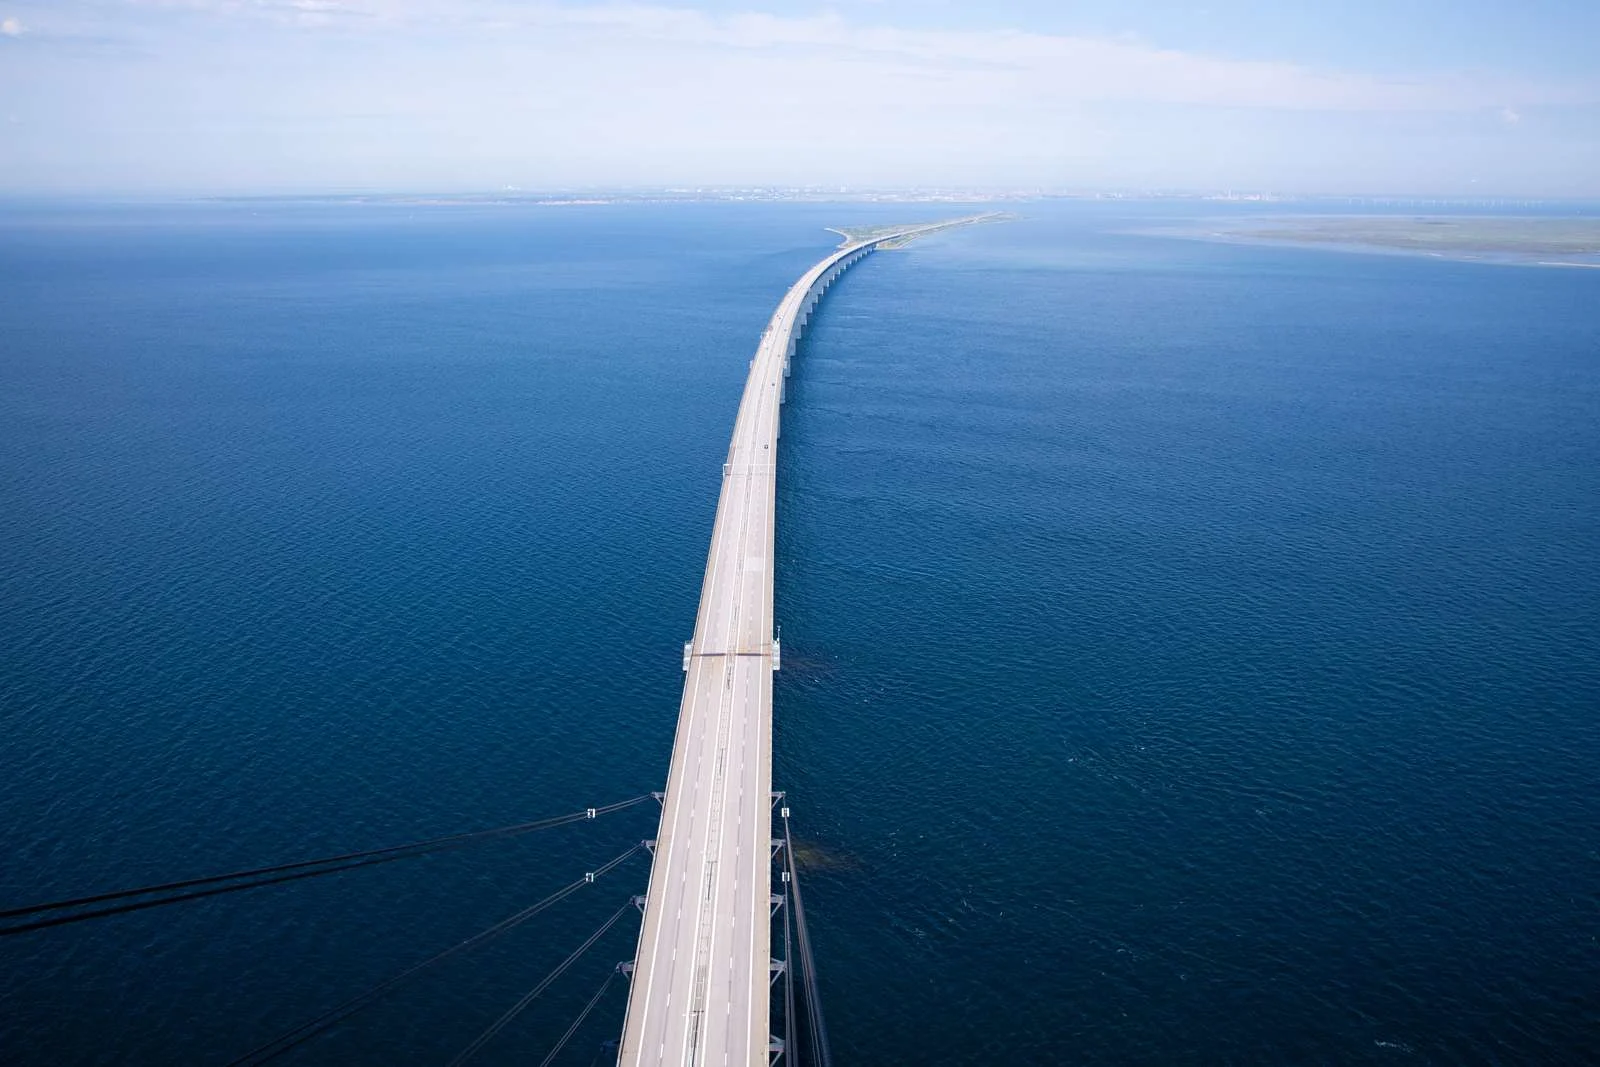 Image of the motorway and the sea from the Øresund bridge pylon camera.